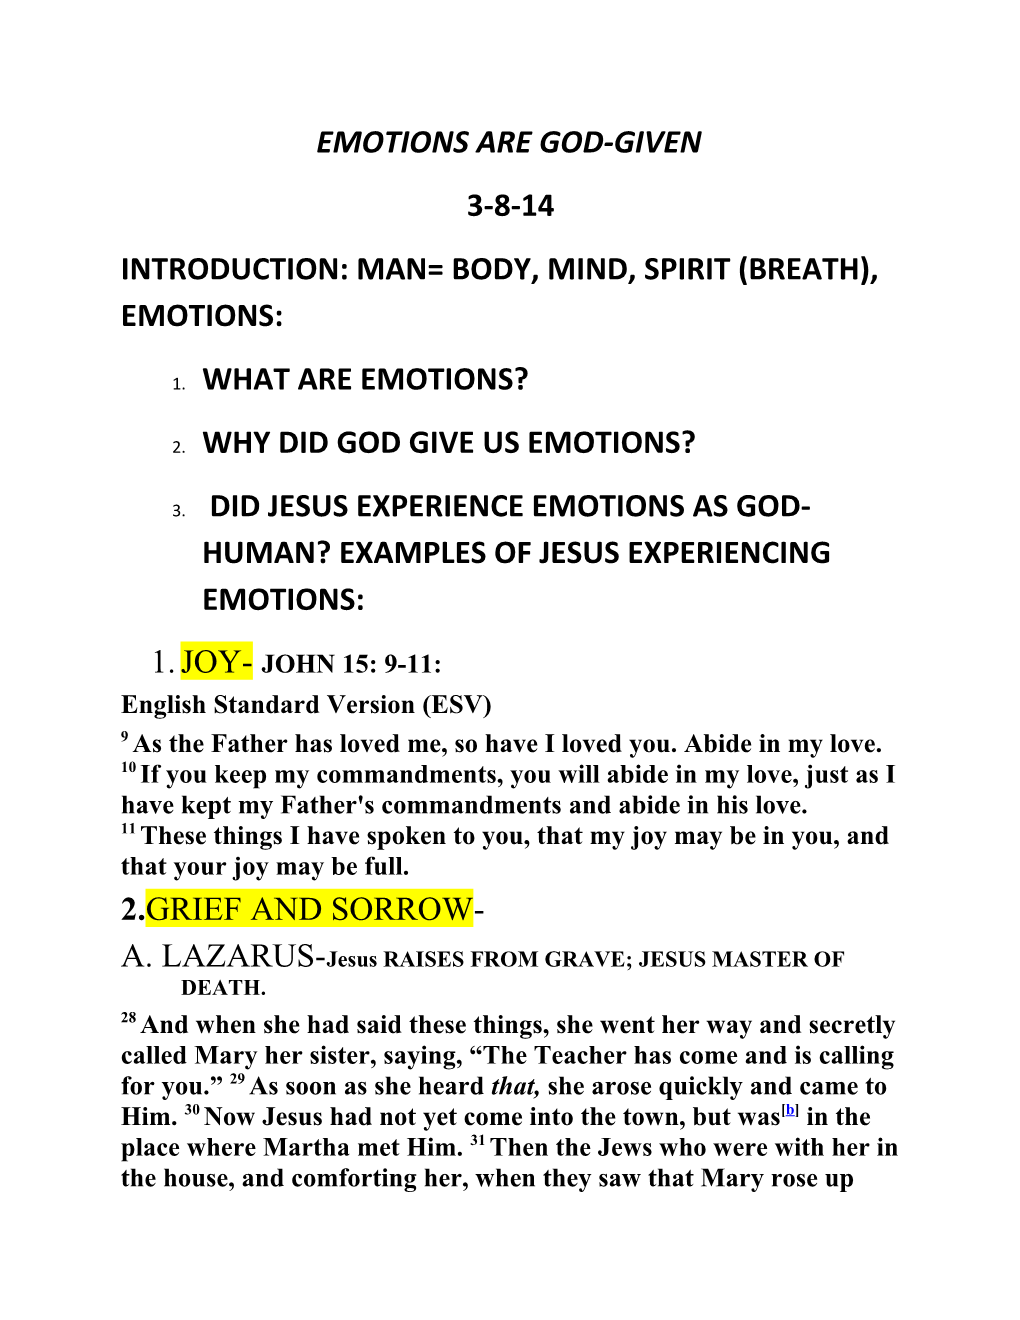 Introduction: Man= Body, Mind, Spirit (Breath), Emotions